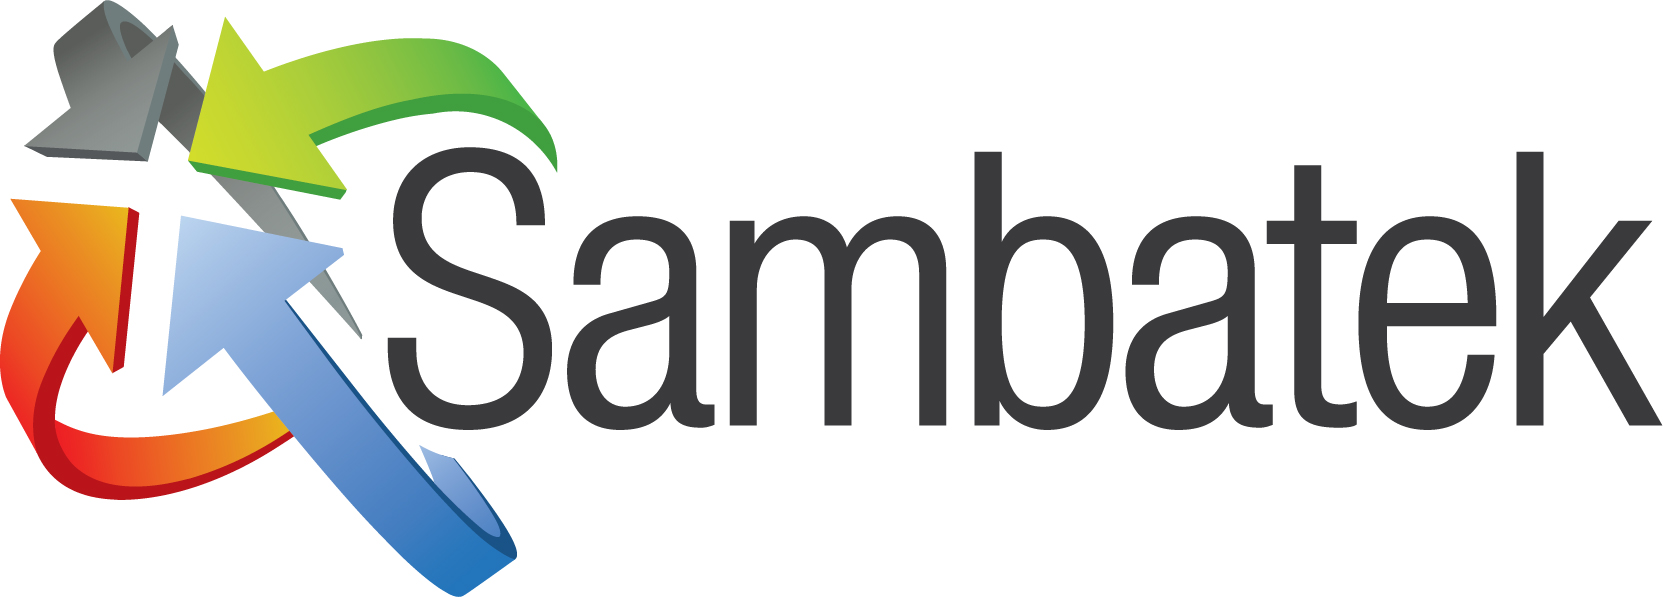 MFRA announces name change to Sambatek